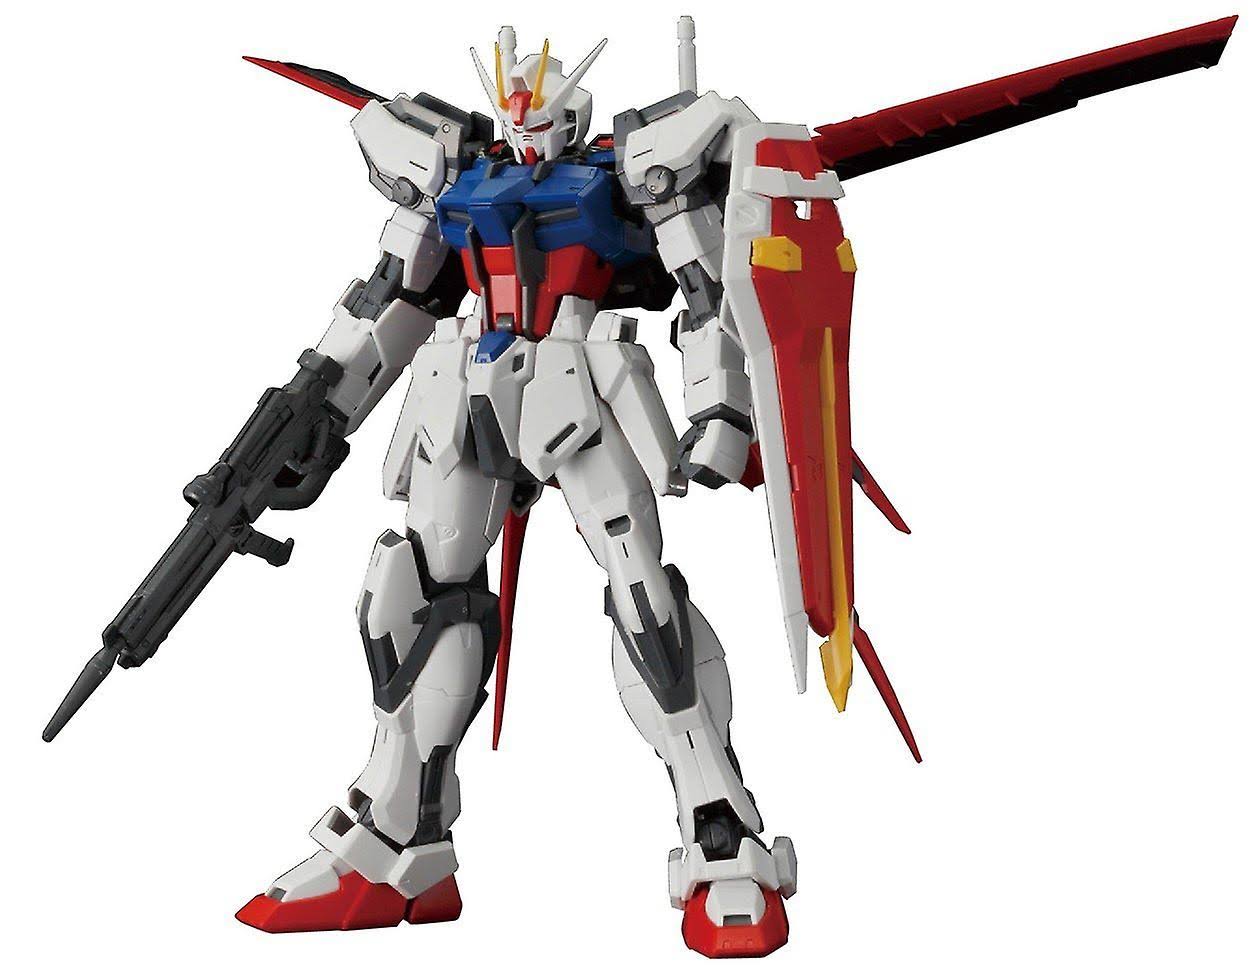 Bandai Hobby MG GAT-X105 Aile Strike Gundam Ver. RM 1/100 Scale Action Figure Model Kit